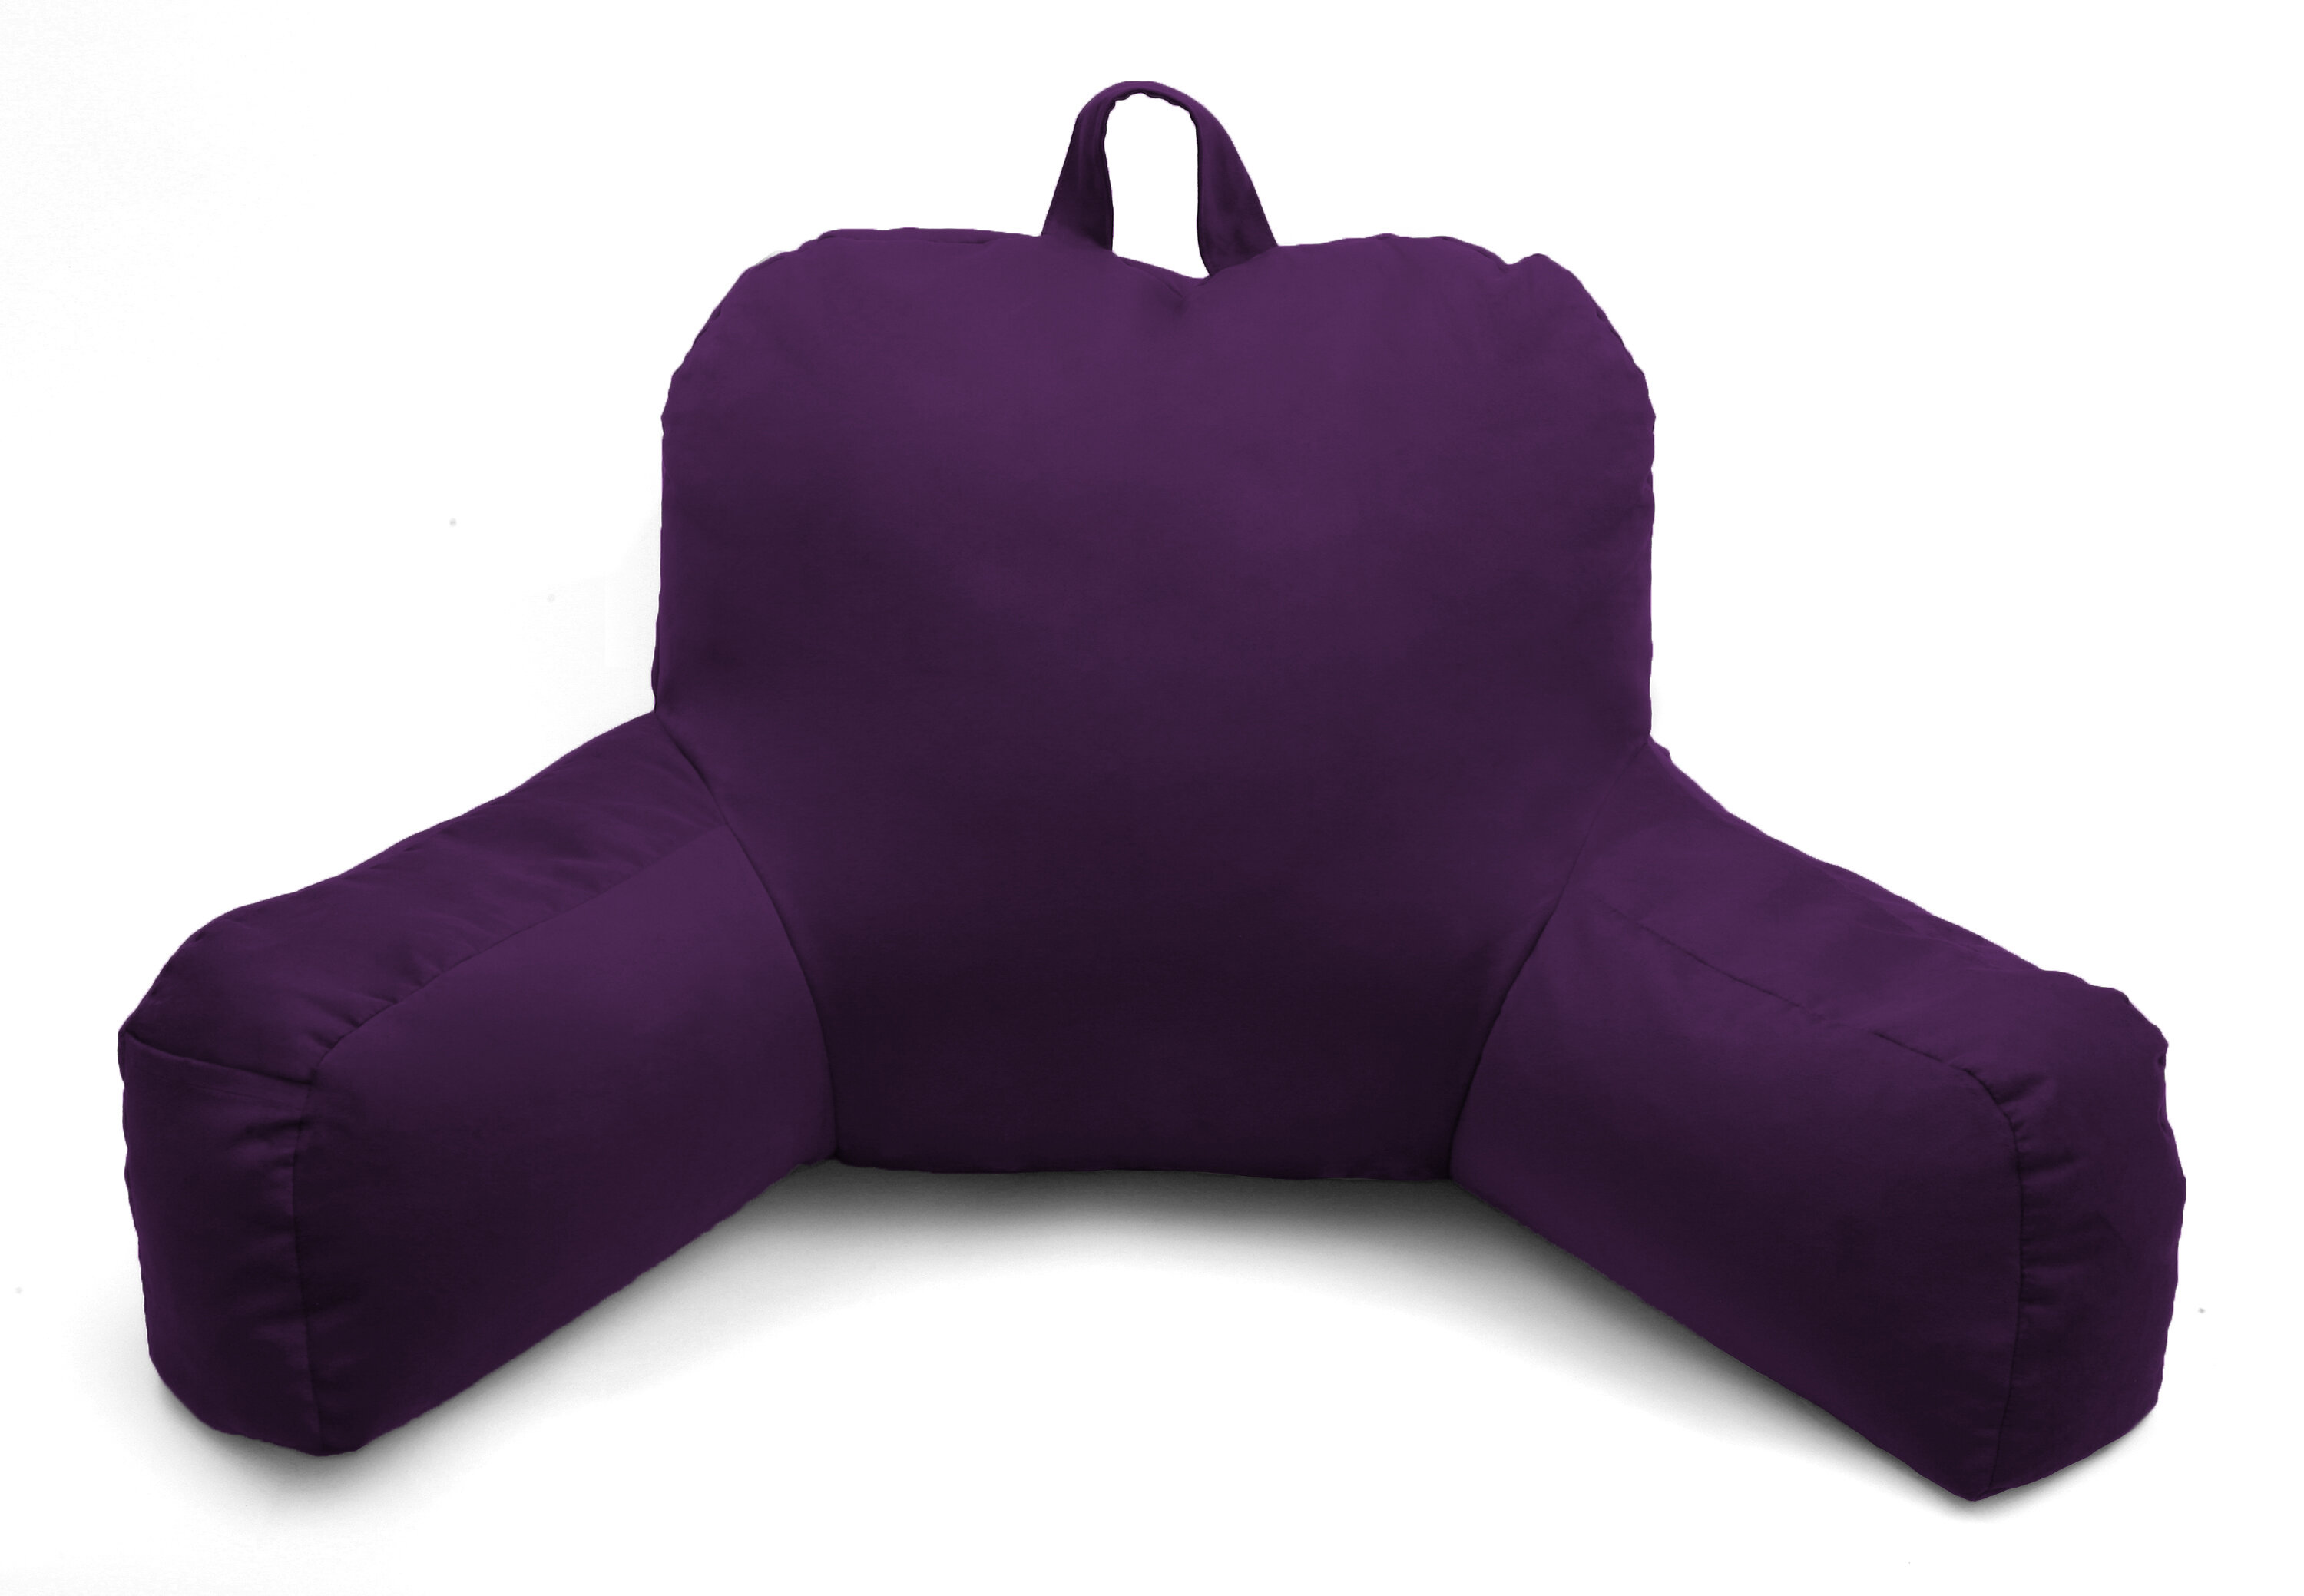 Microsuede Bedrest Pillow - Best Bed Rest